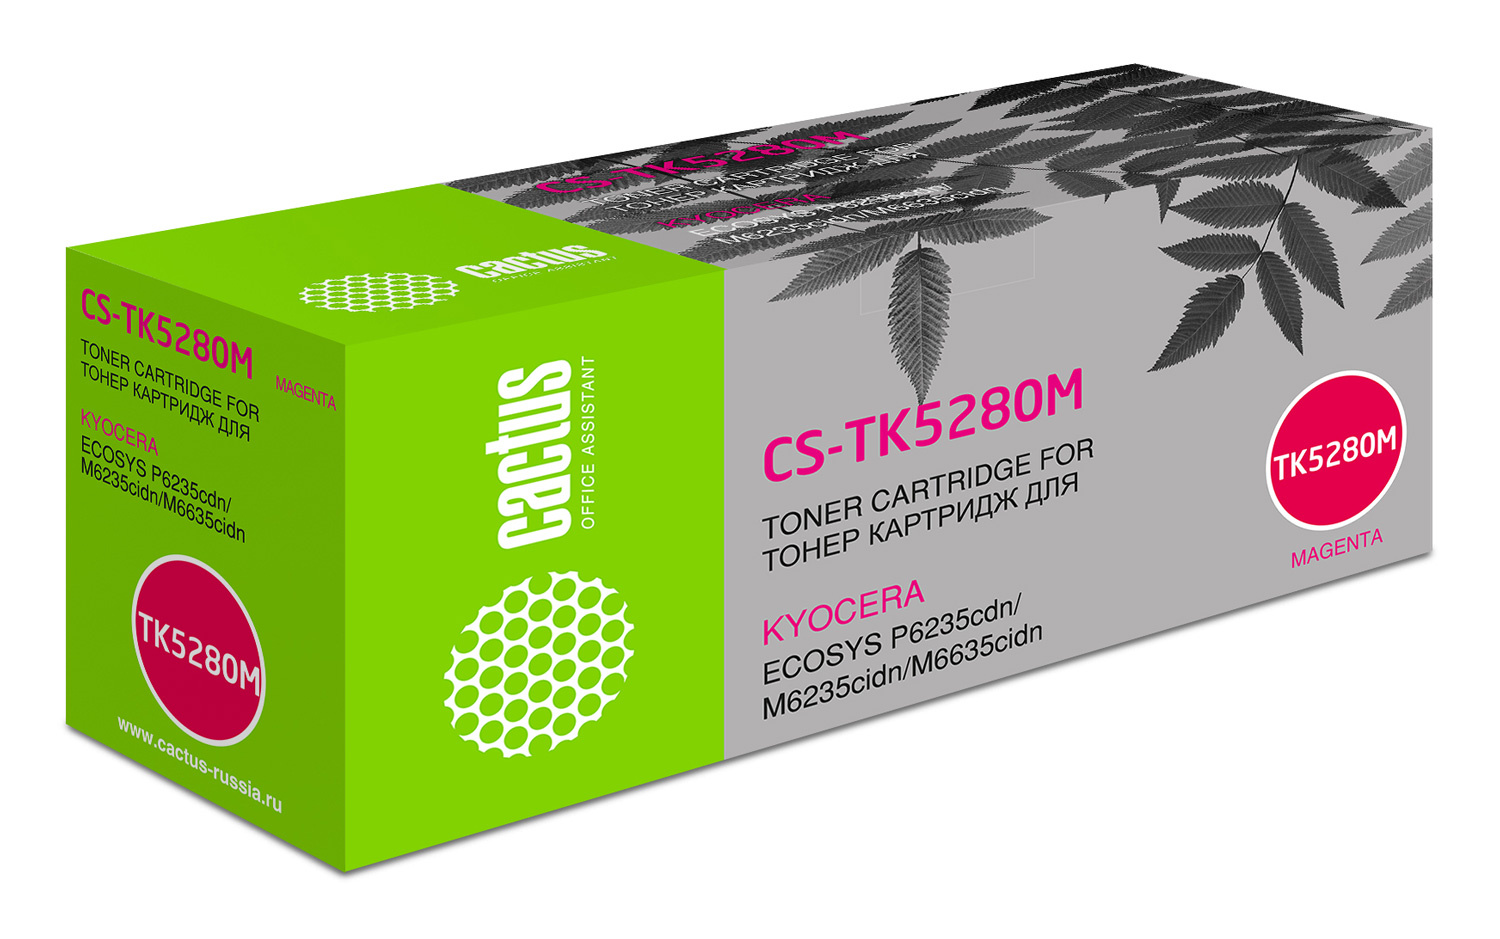   Cactus CS-TK5280M TK-5280M  (11000.)  Kyocera Ecosys P6235cdn/M6235cidn/M6635cidn